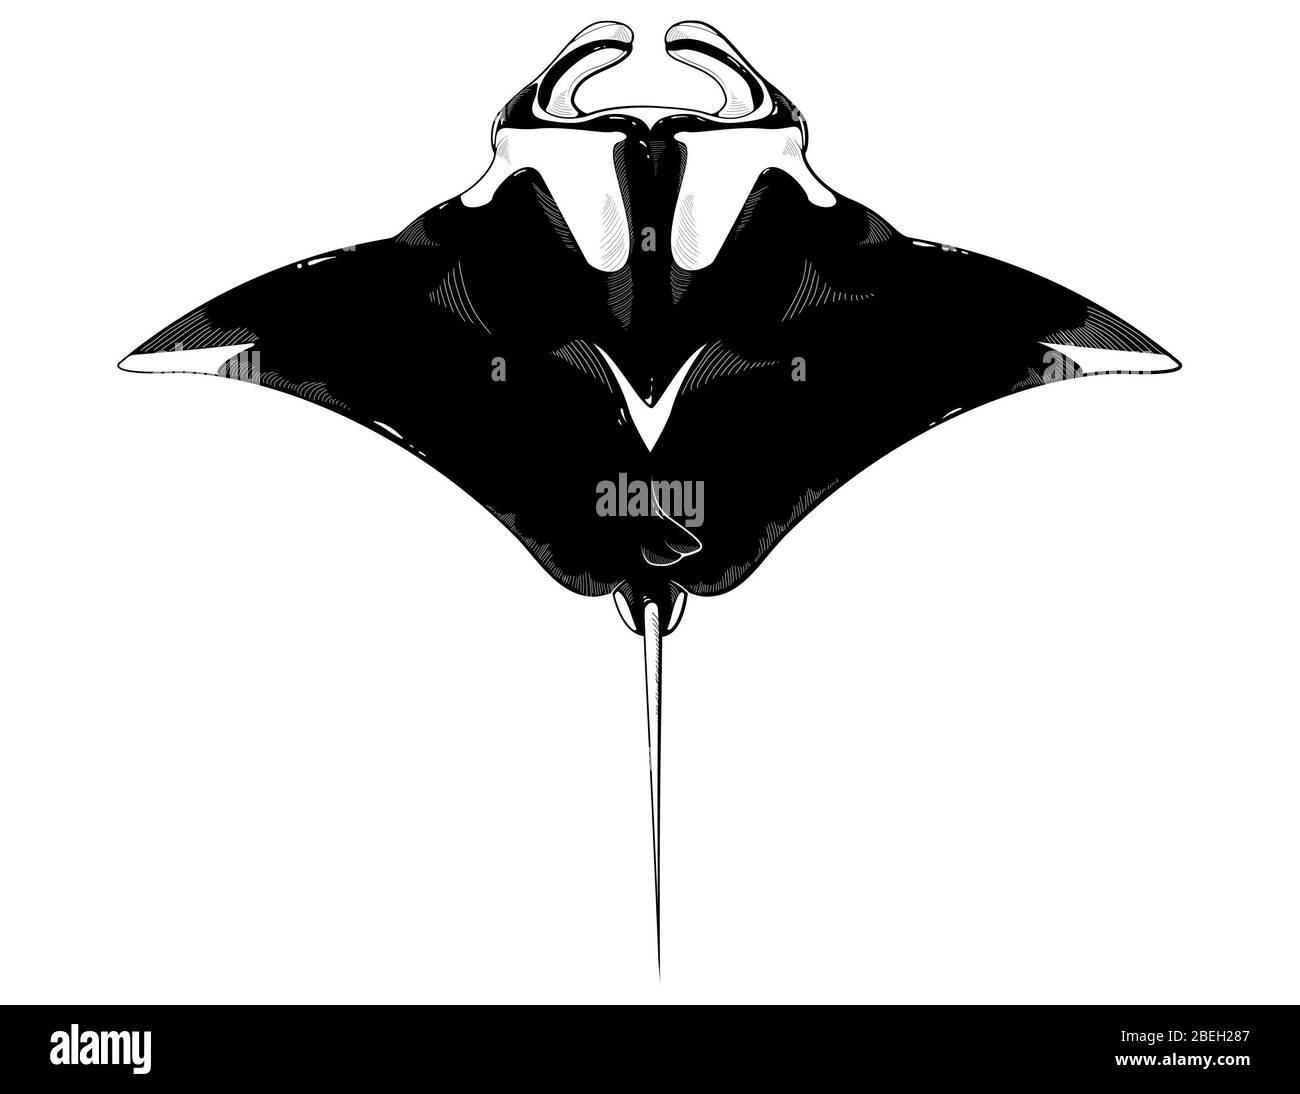 Giant Oceanic Manta Ray, illustration Stock Photo